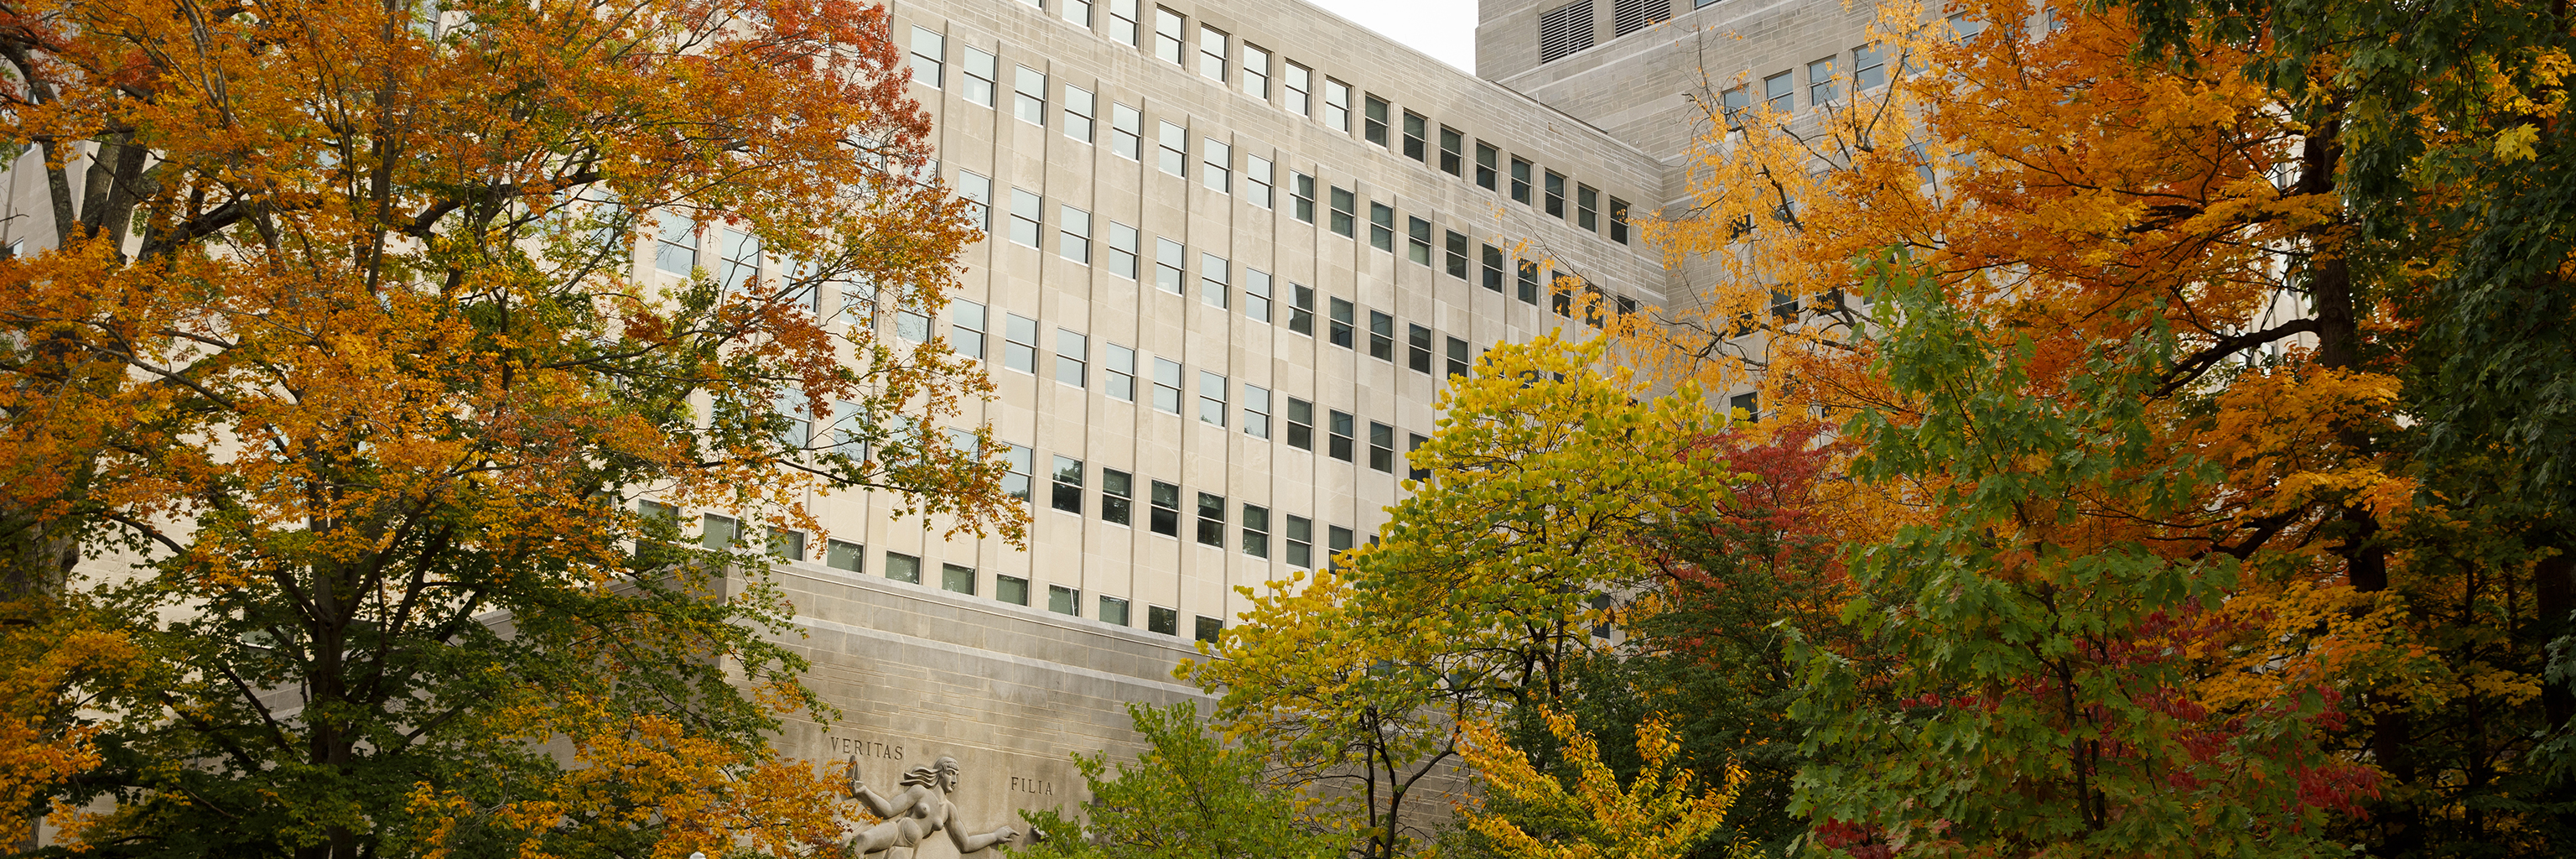 Fall image of Ballantine Hall at Indiana University, Bloomington campus.